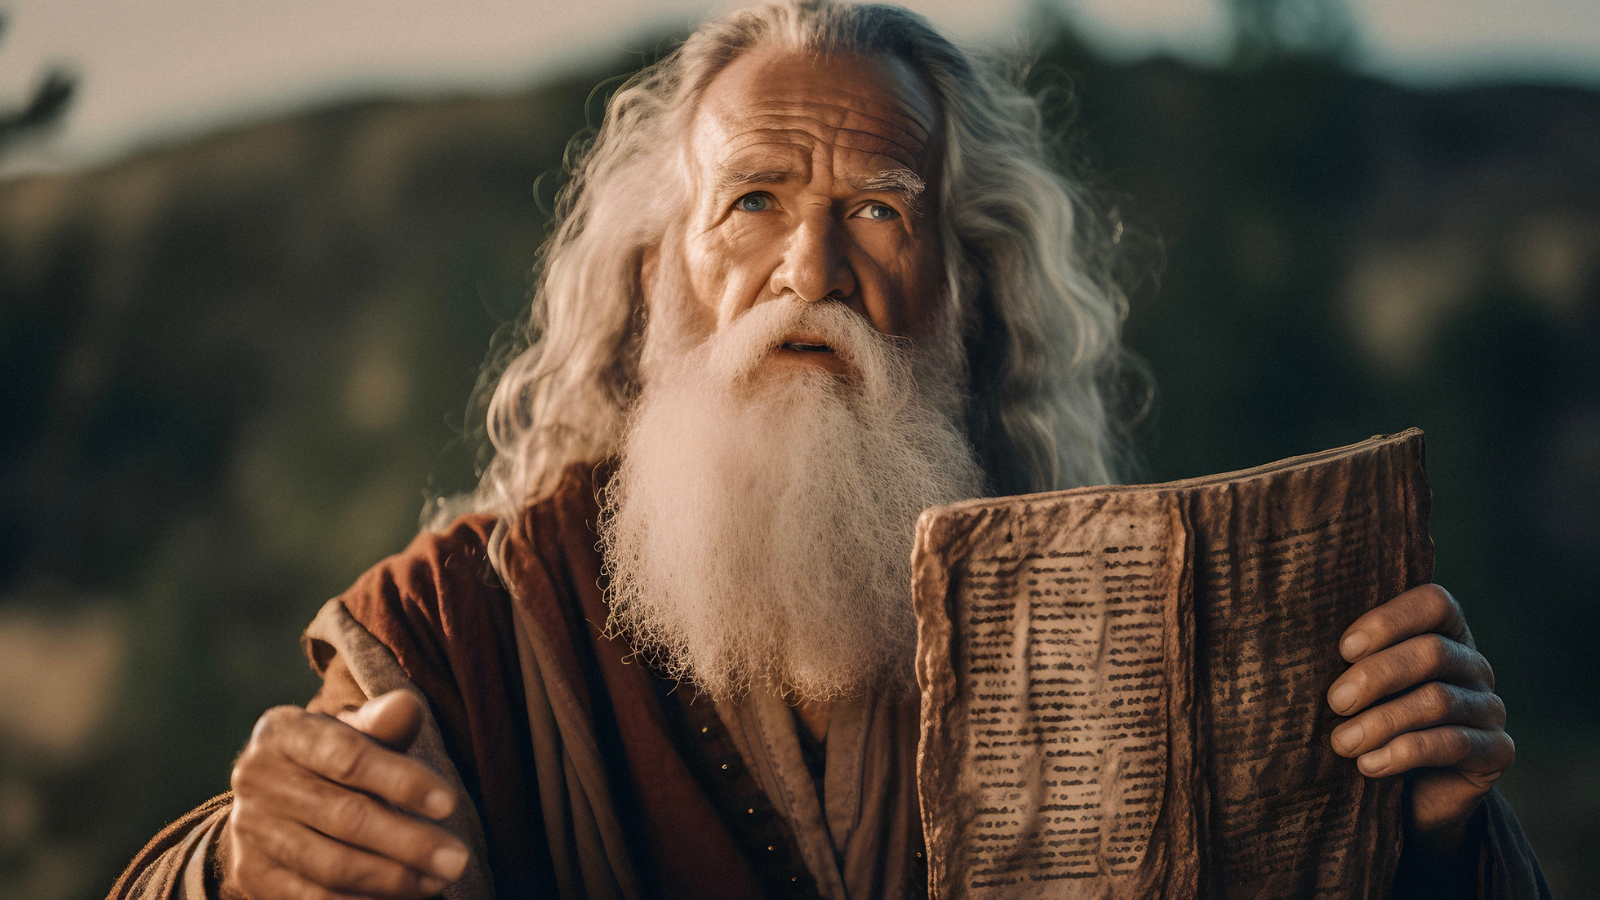 Moses holding up the ten commandments.